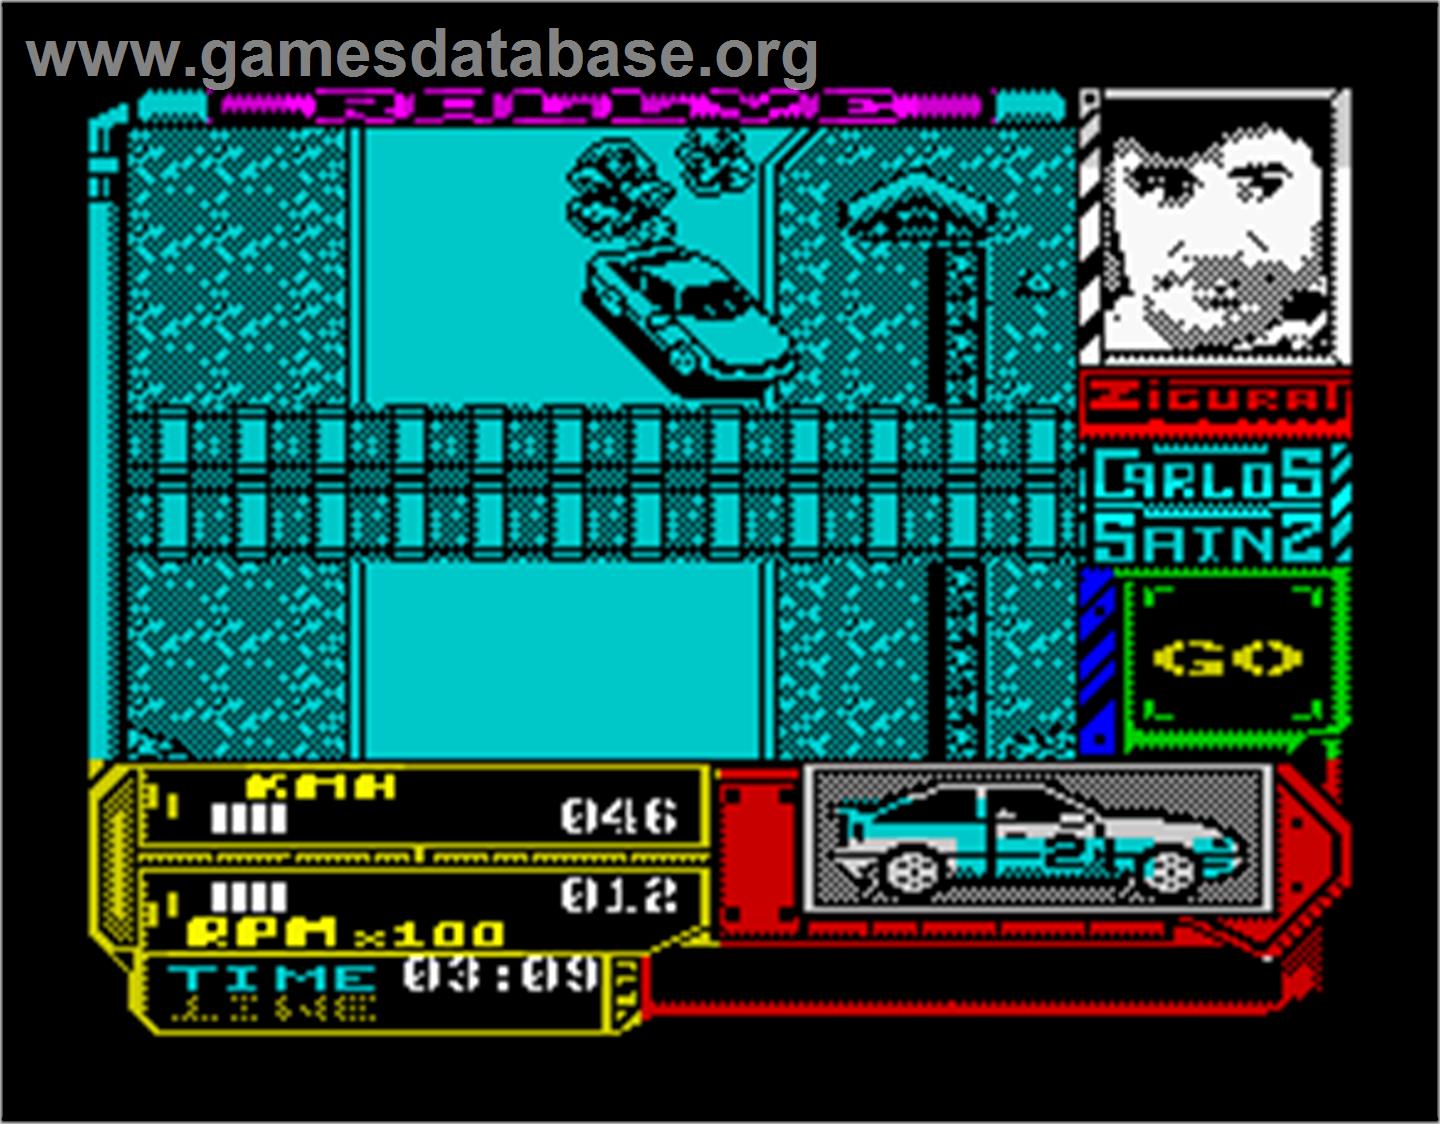 Carlos Sainz - Sinclair ZX Spectrum - Artwork - In Game